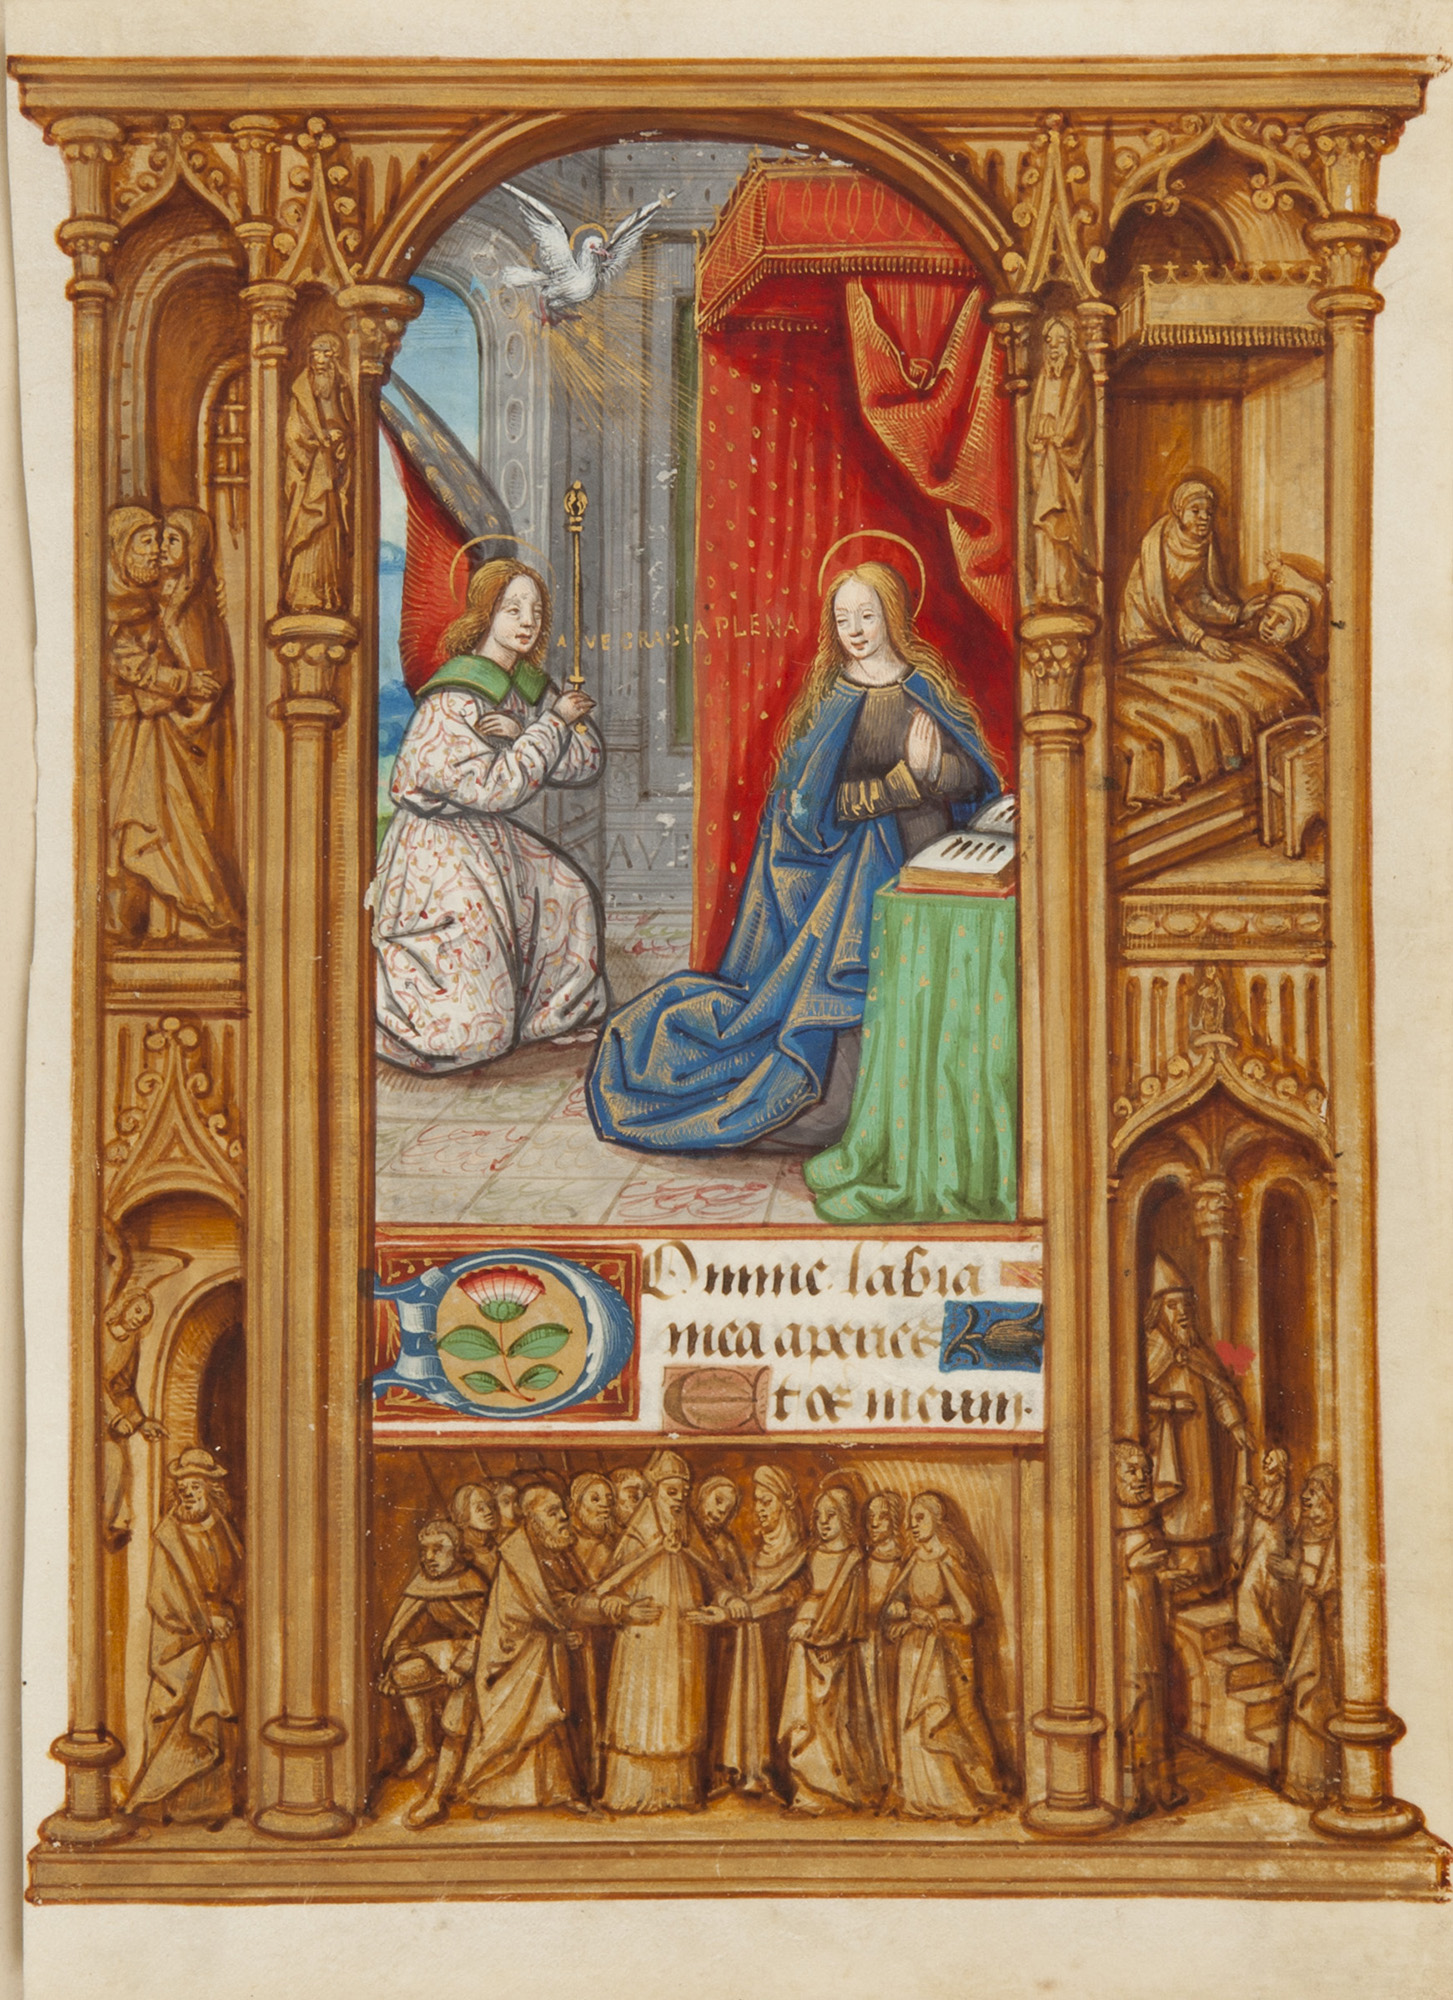 Artist Unknown, Annunciation, circa 1480. Pigment, gold on vellum. Collection of DePaul University, Religious Art Fund, Art Endowment Fund.